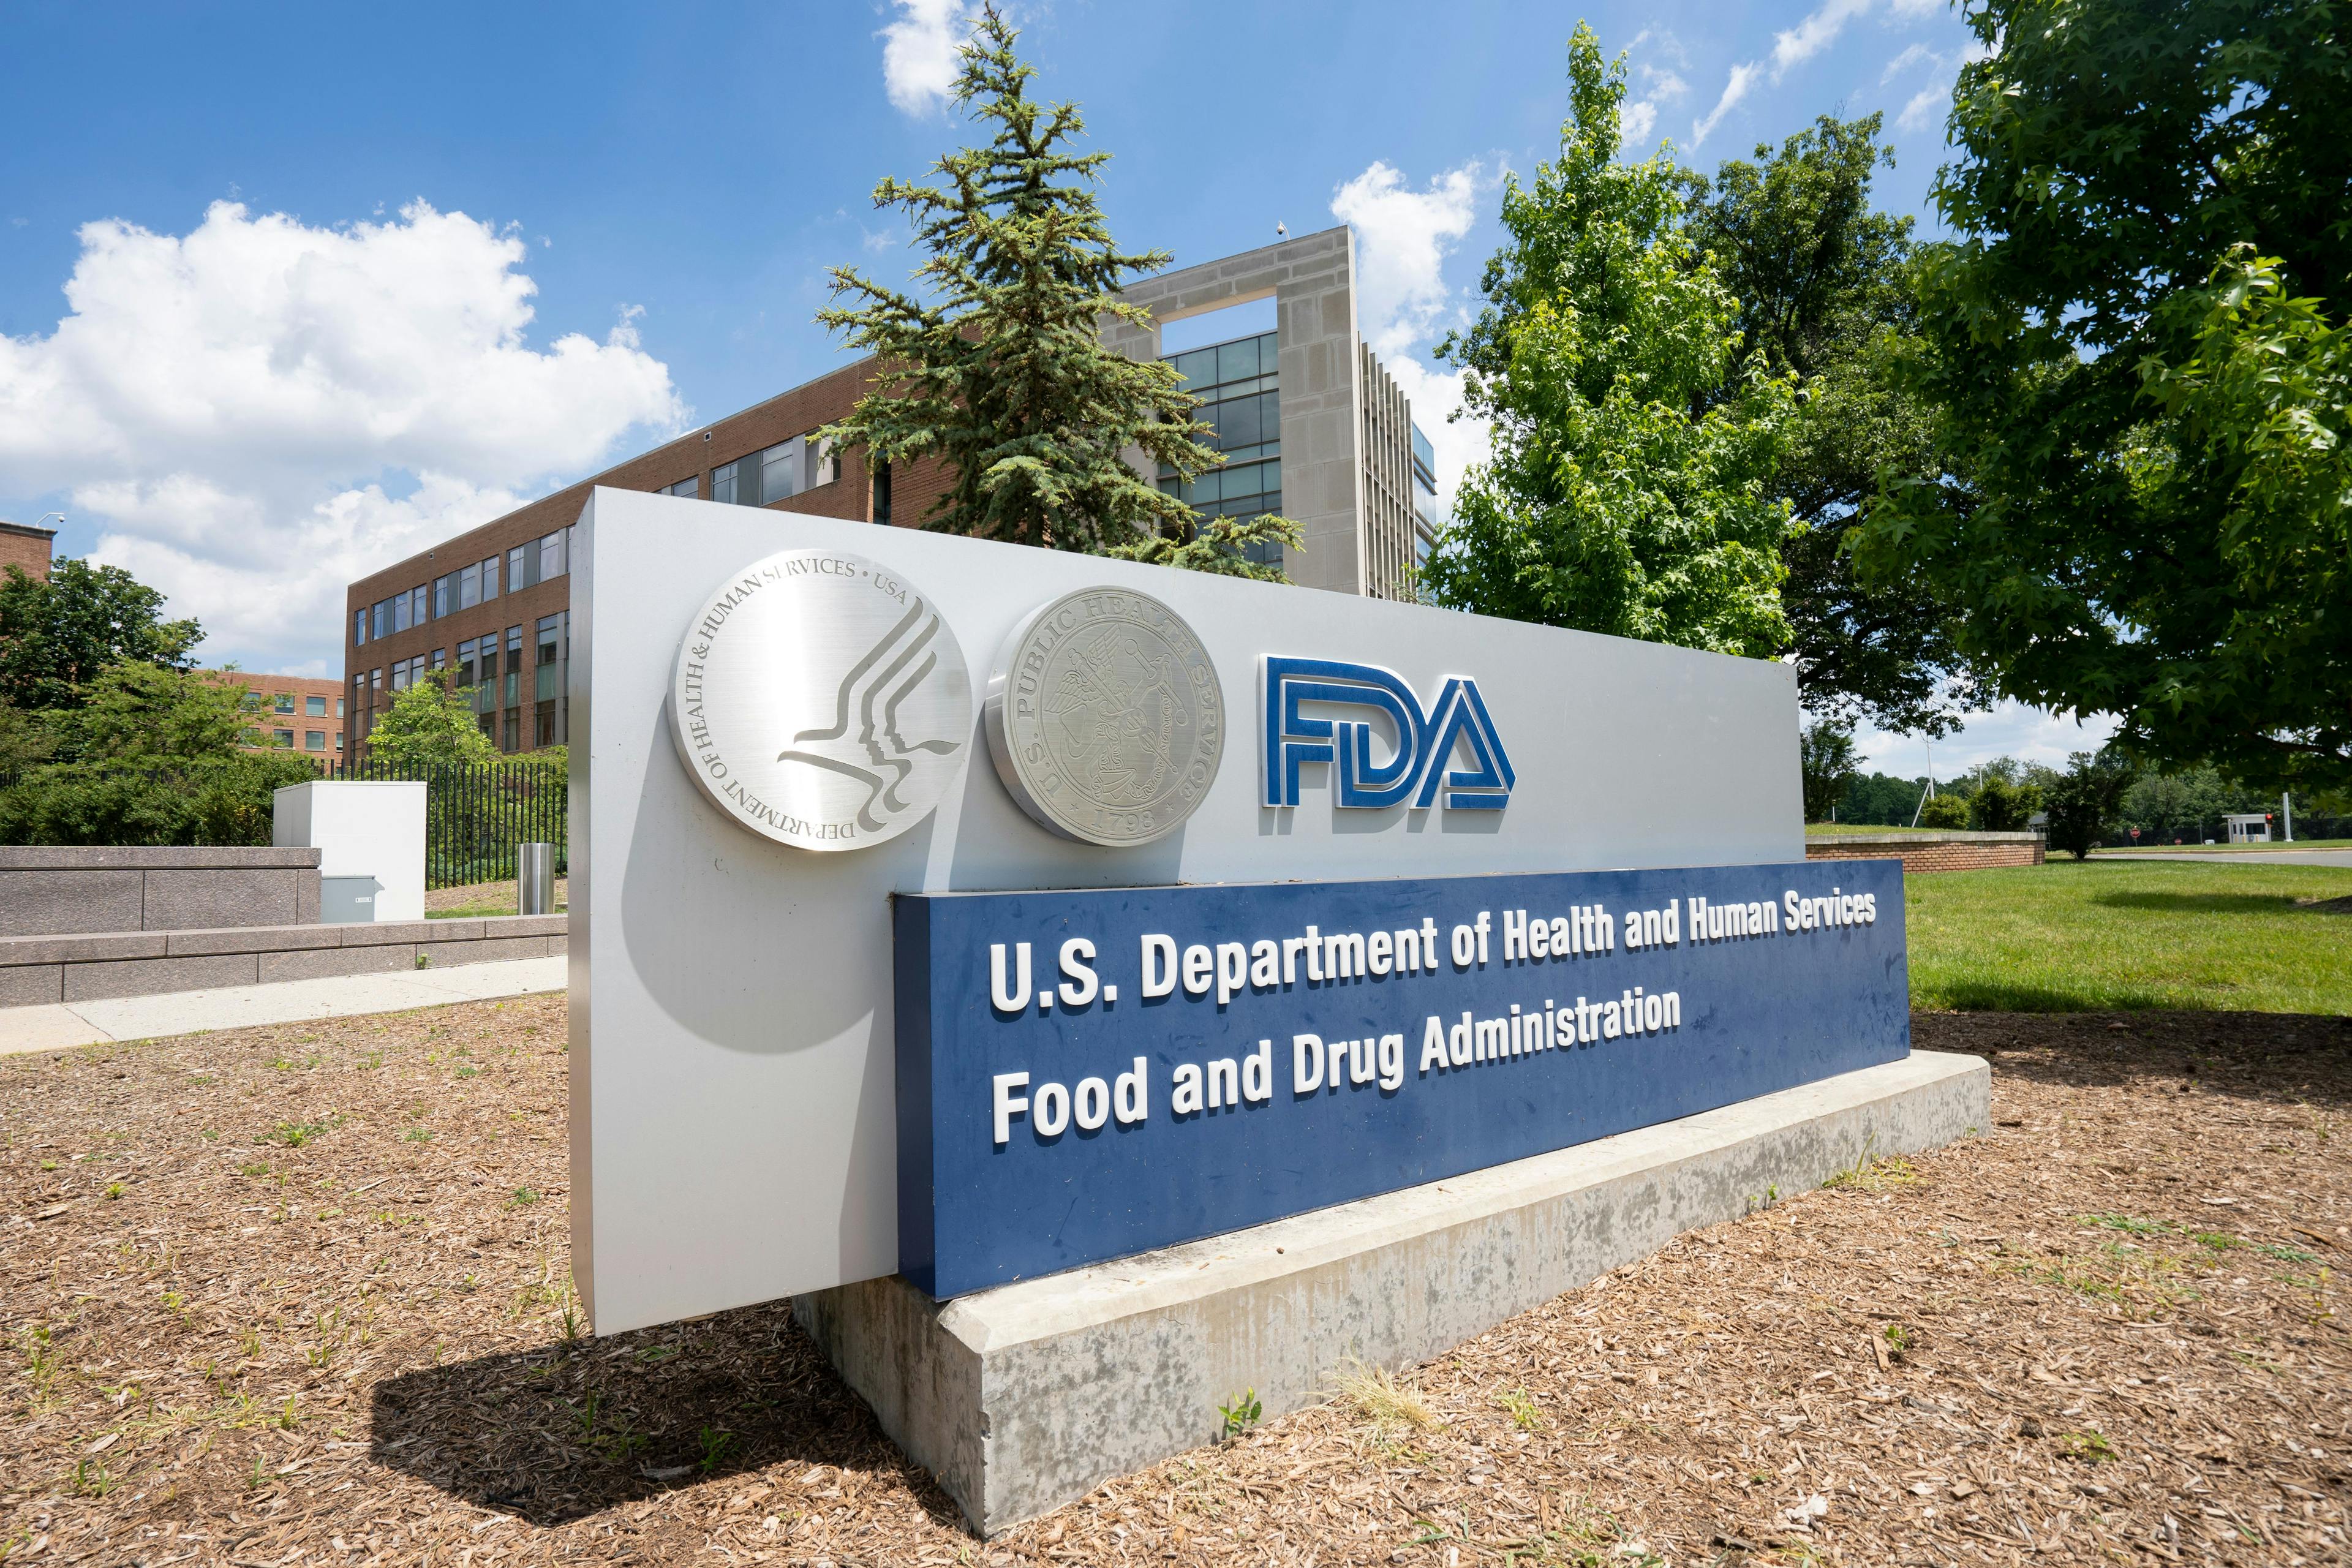 FDA White Oak Campus in Silver Spring, Maryland (Tada Images/Adobe Stock)